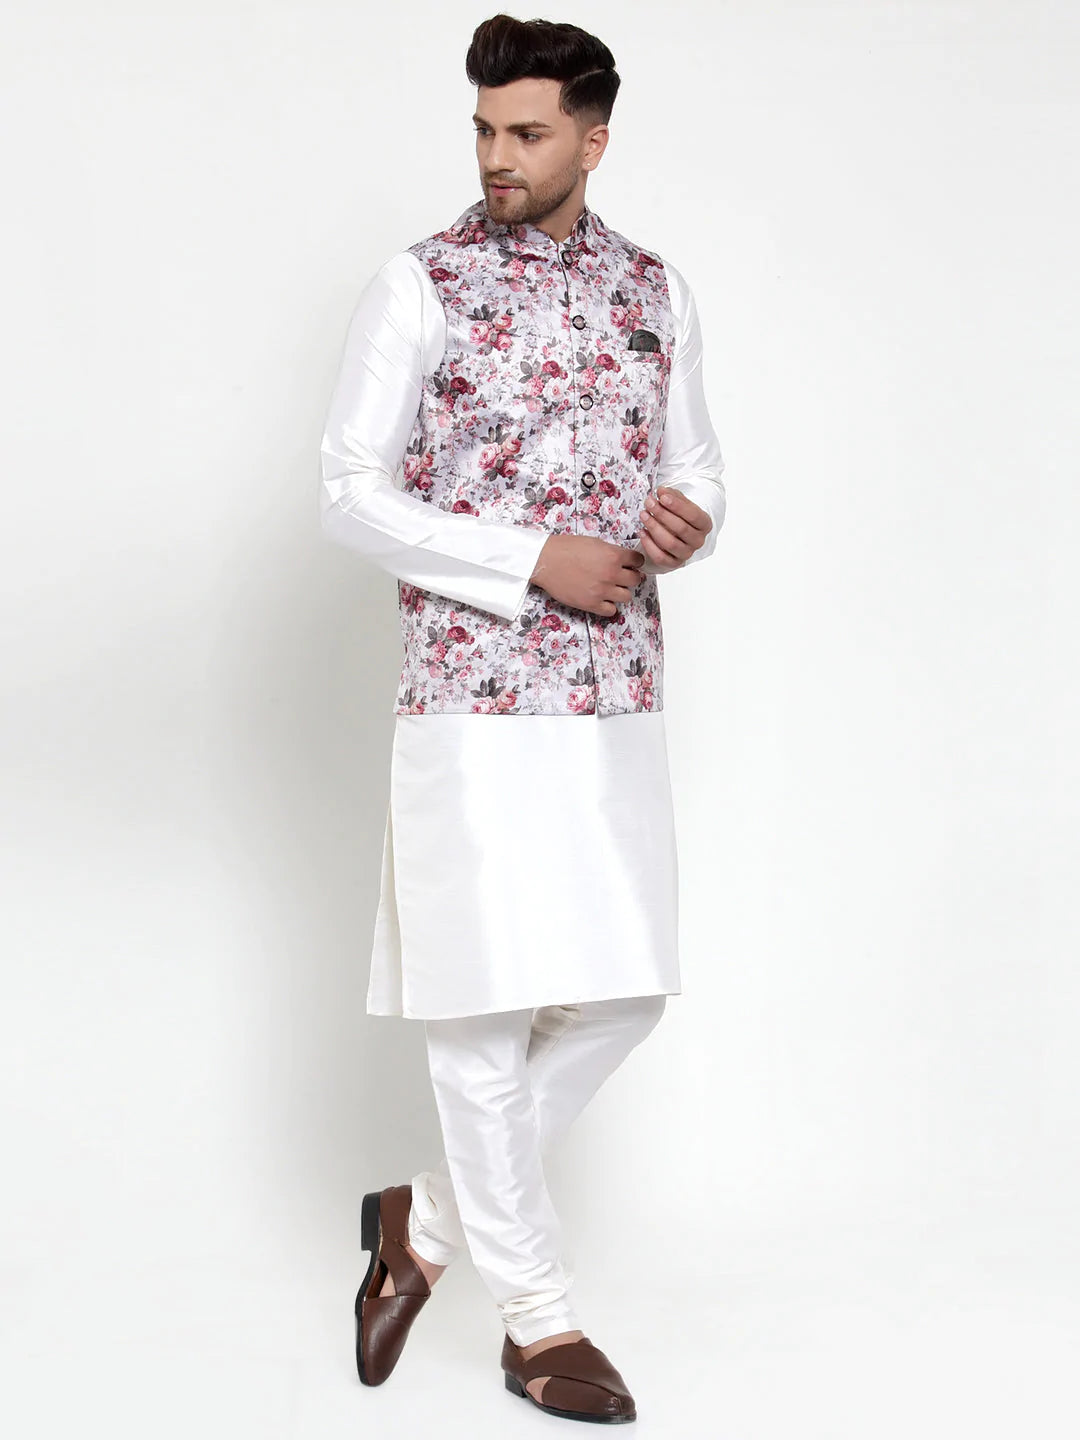 Jompers Men's Solid Dupion Kurta Pajama with Printed Nehru Jacket ( JOKPWC OW-D 4014Silver )